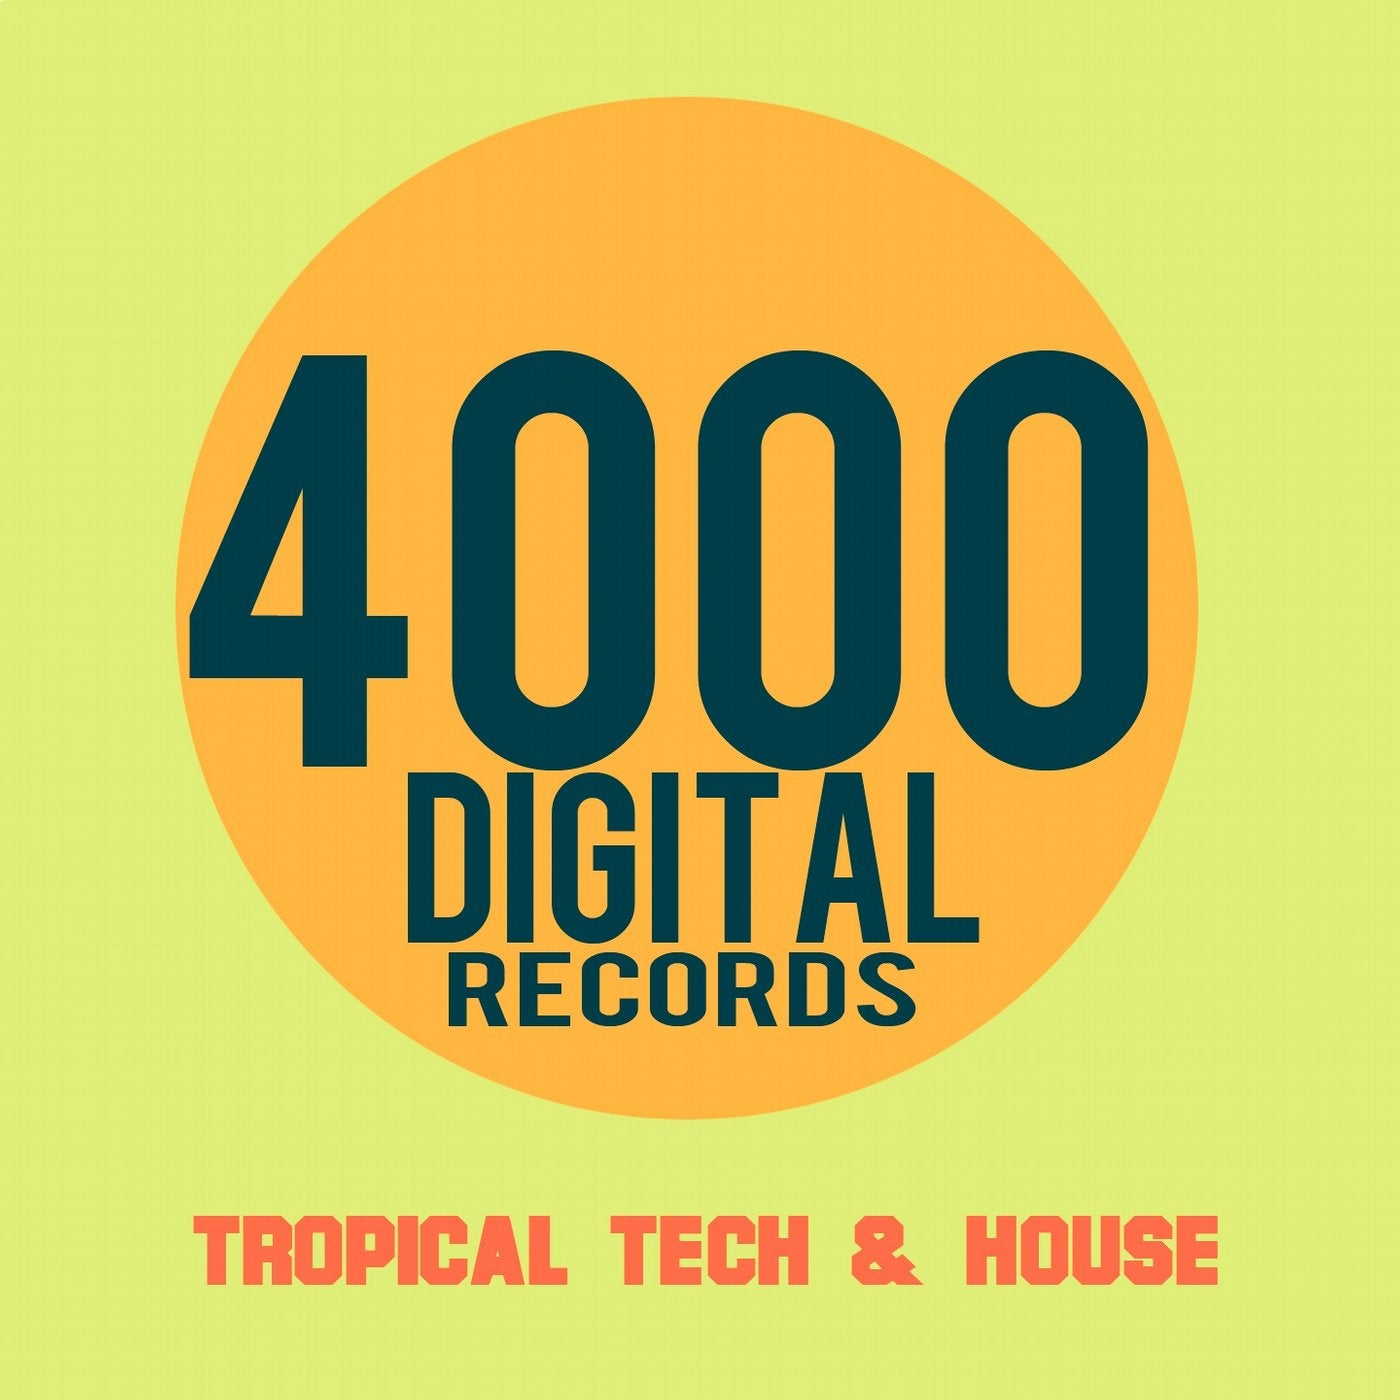 Tropical Tech & House